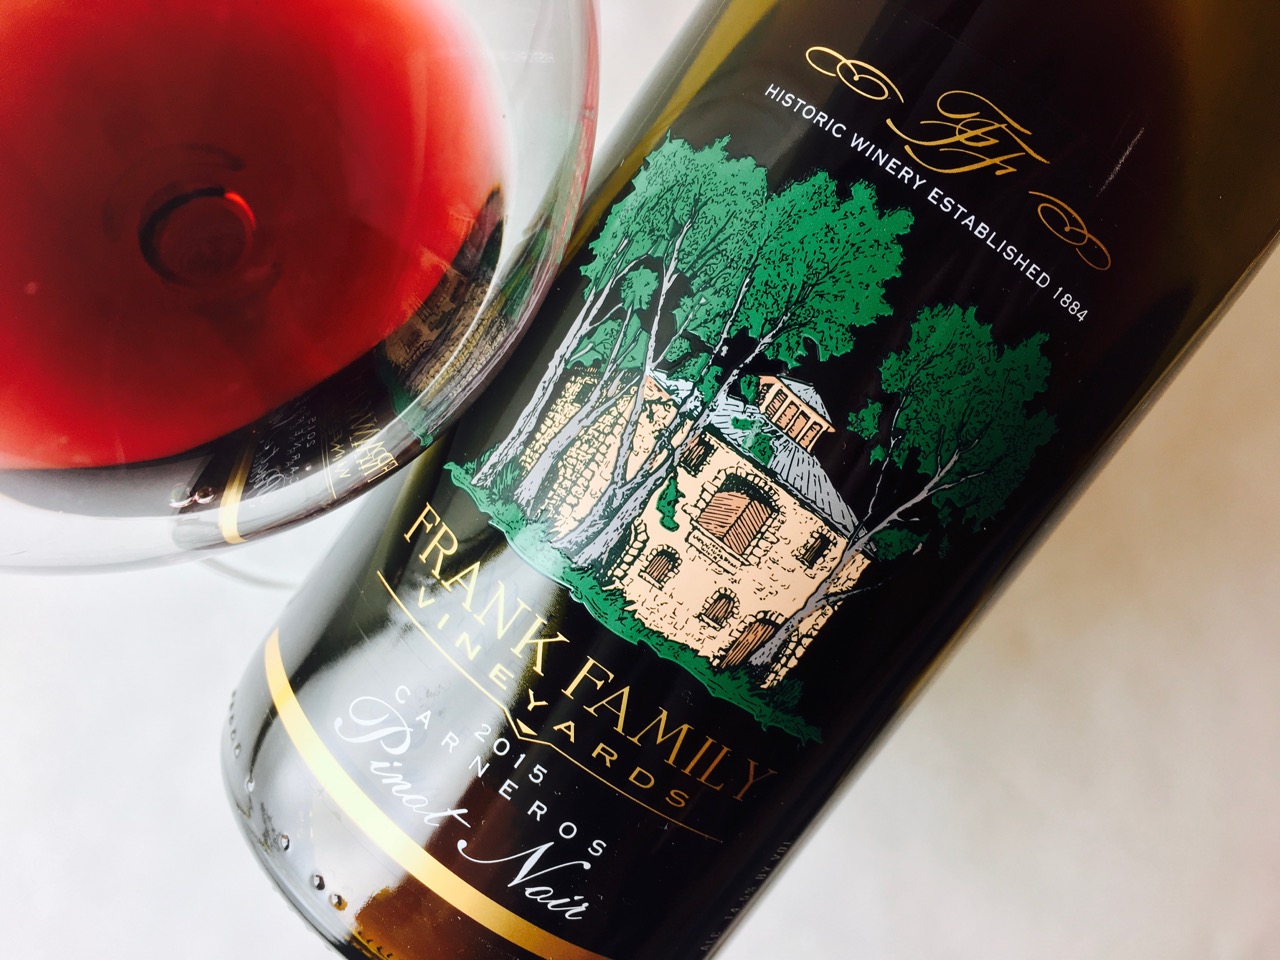 2015 Frank Family Vineyards Pinot Noir Carneros